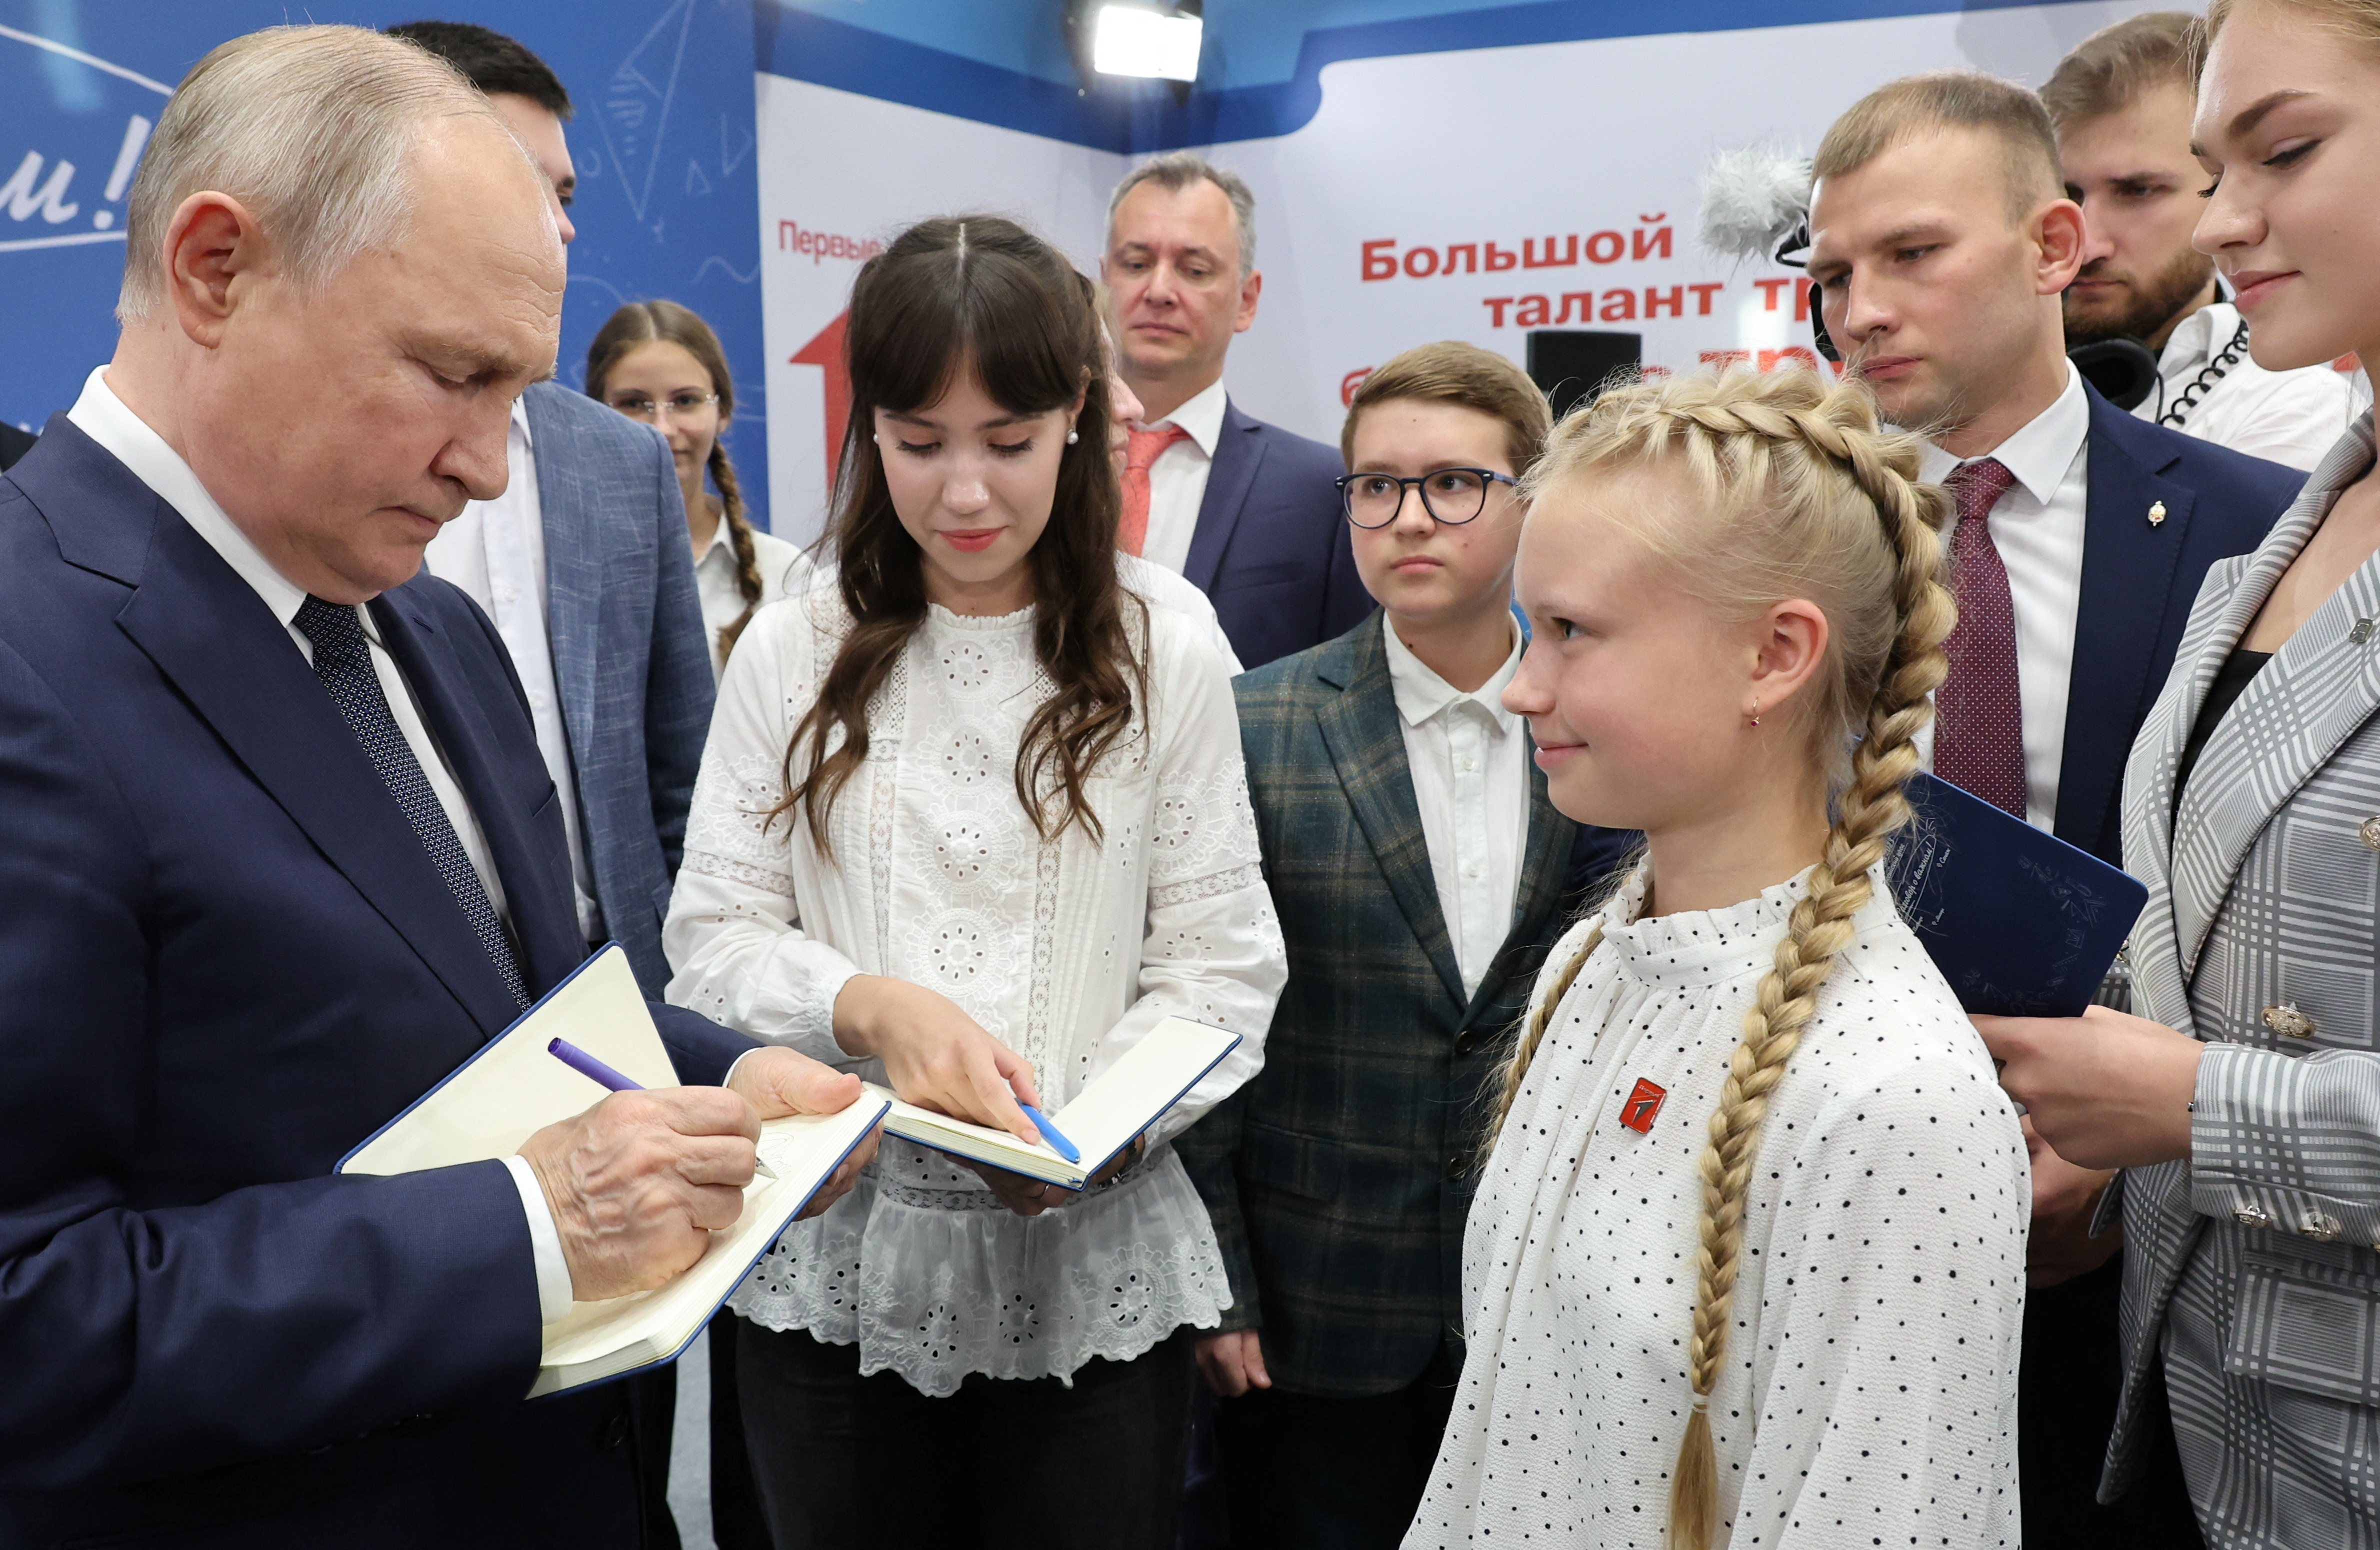 El presidente ruso, Vladímir Putin, firma autógrafos a escolares en un evento en Solnechnogorsk, en Moscú (Rusia), este viernes.